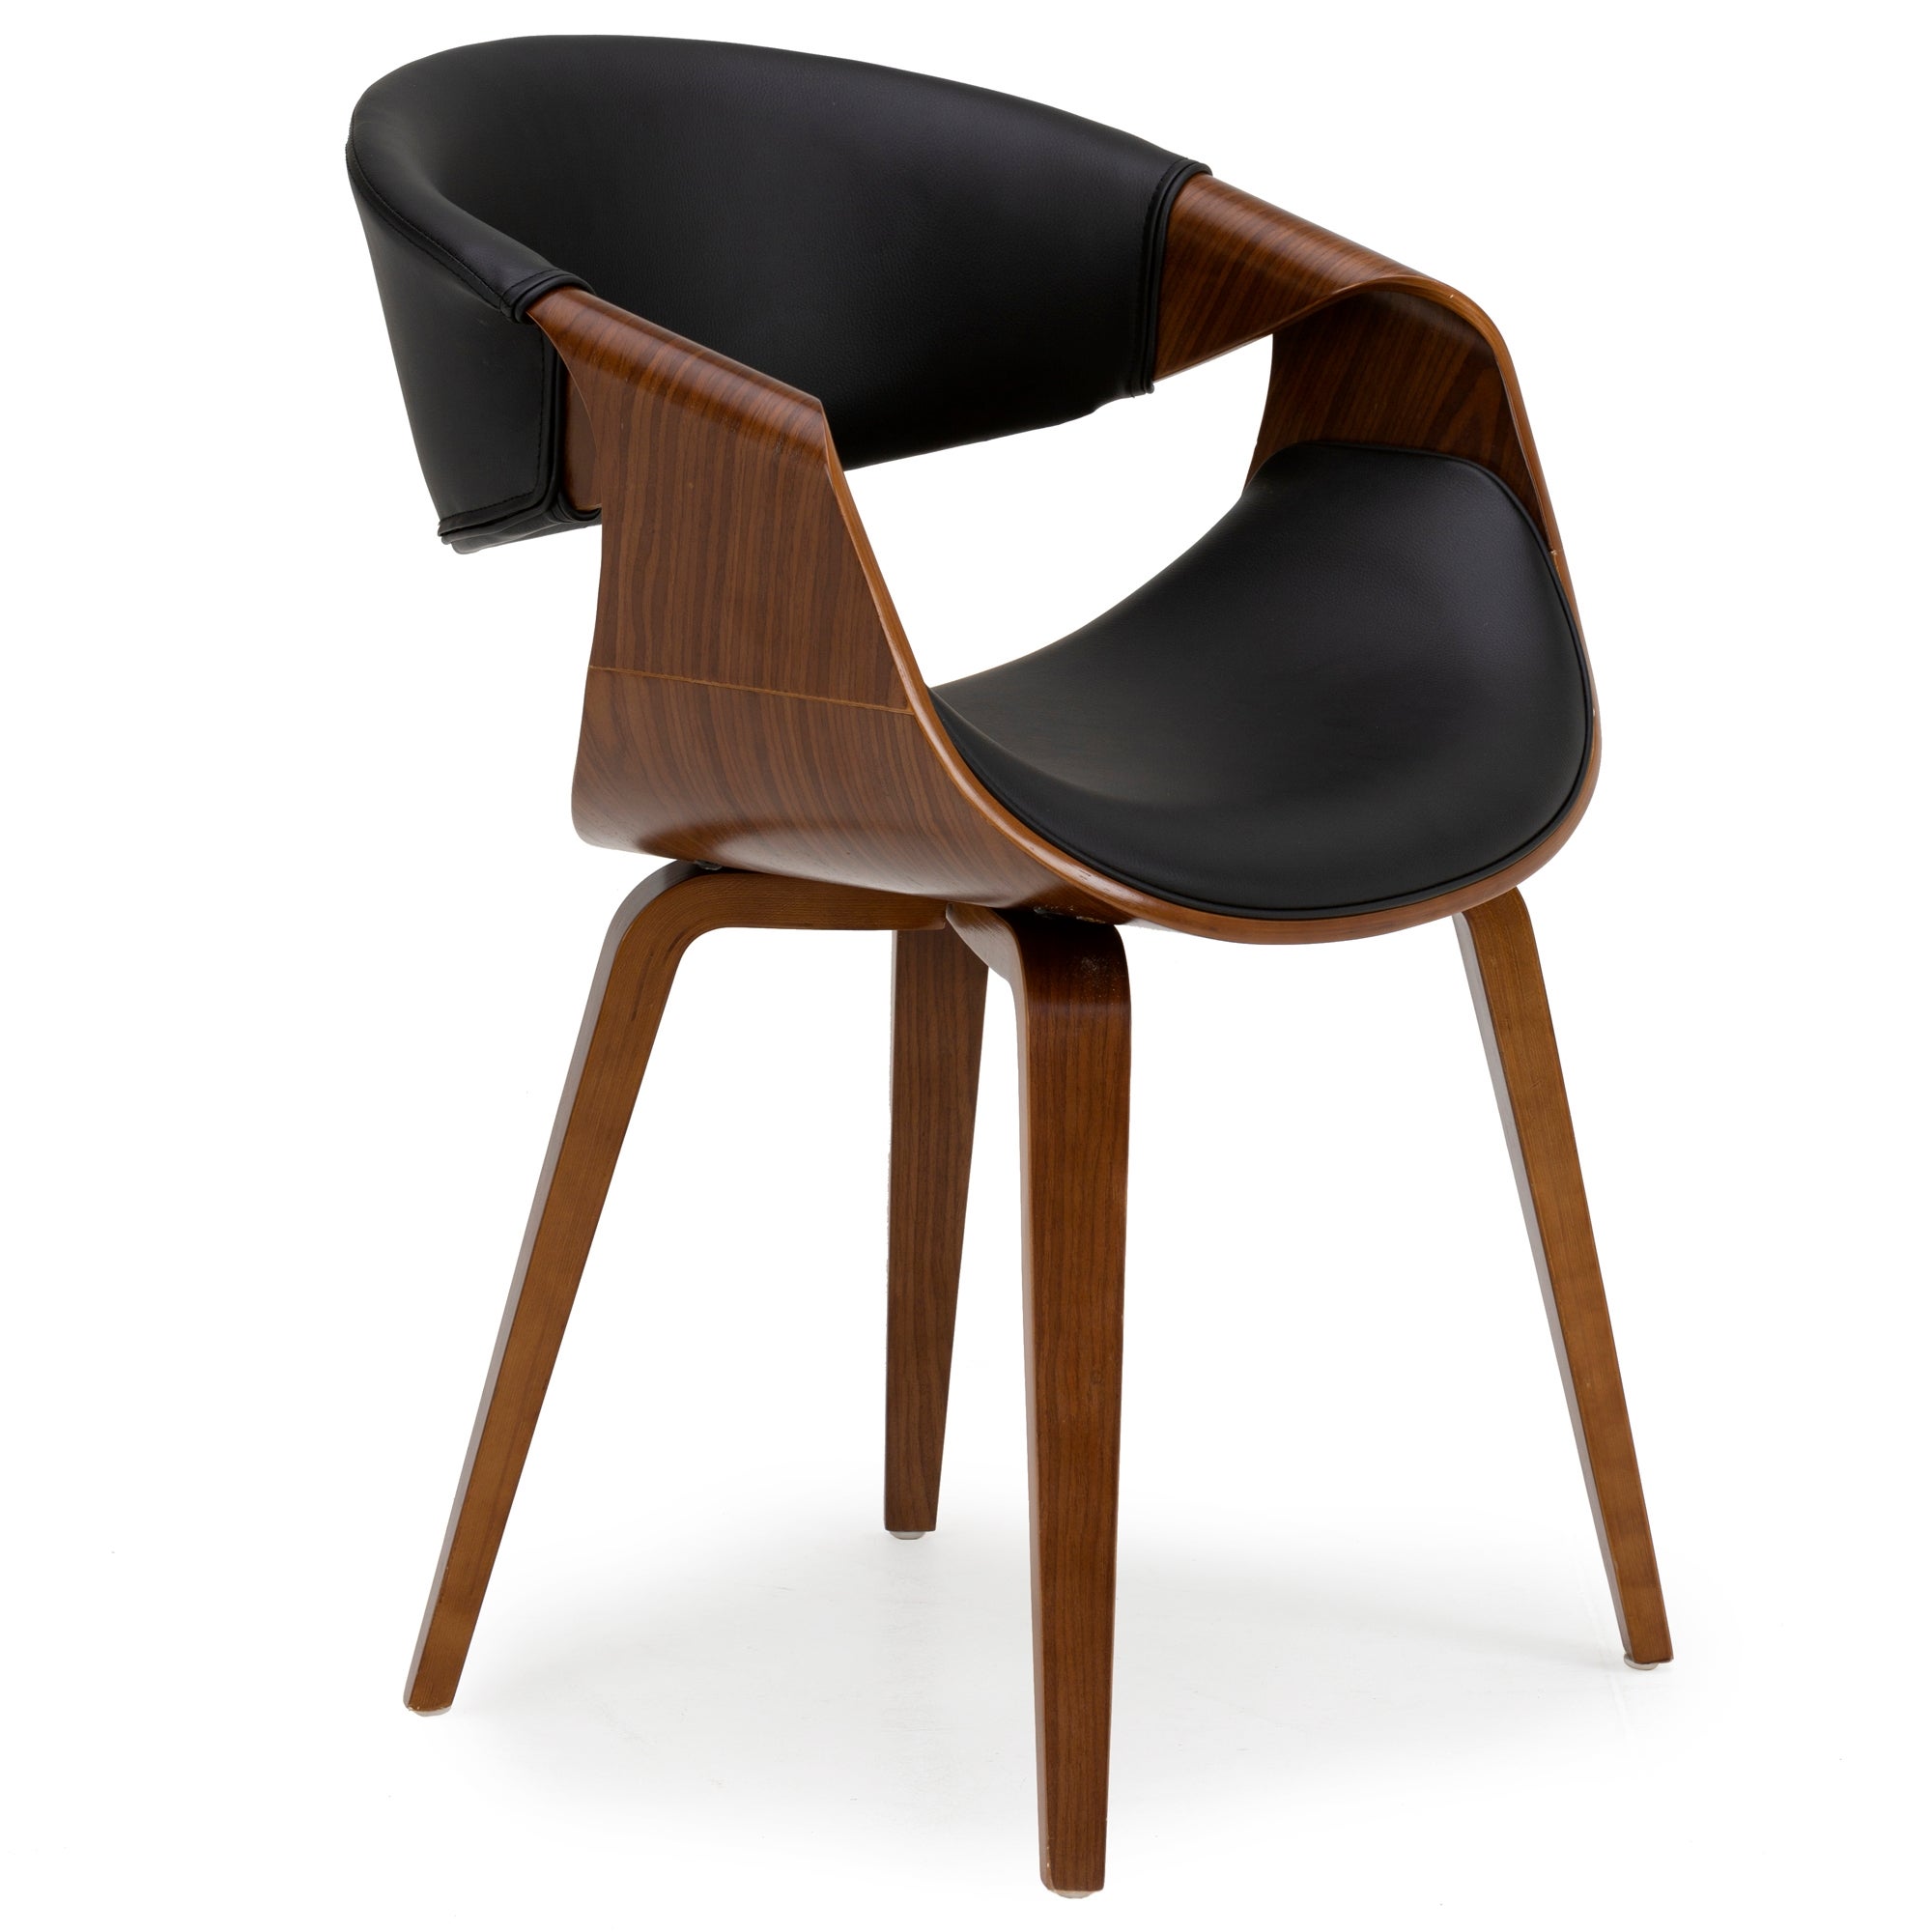 Dunelm - Modena Chair Black PU Leather Black – FurnitureCompare